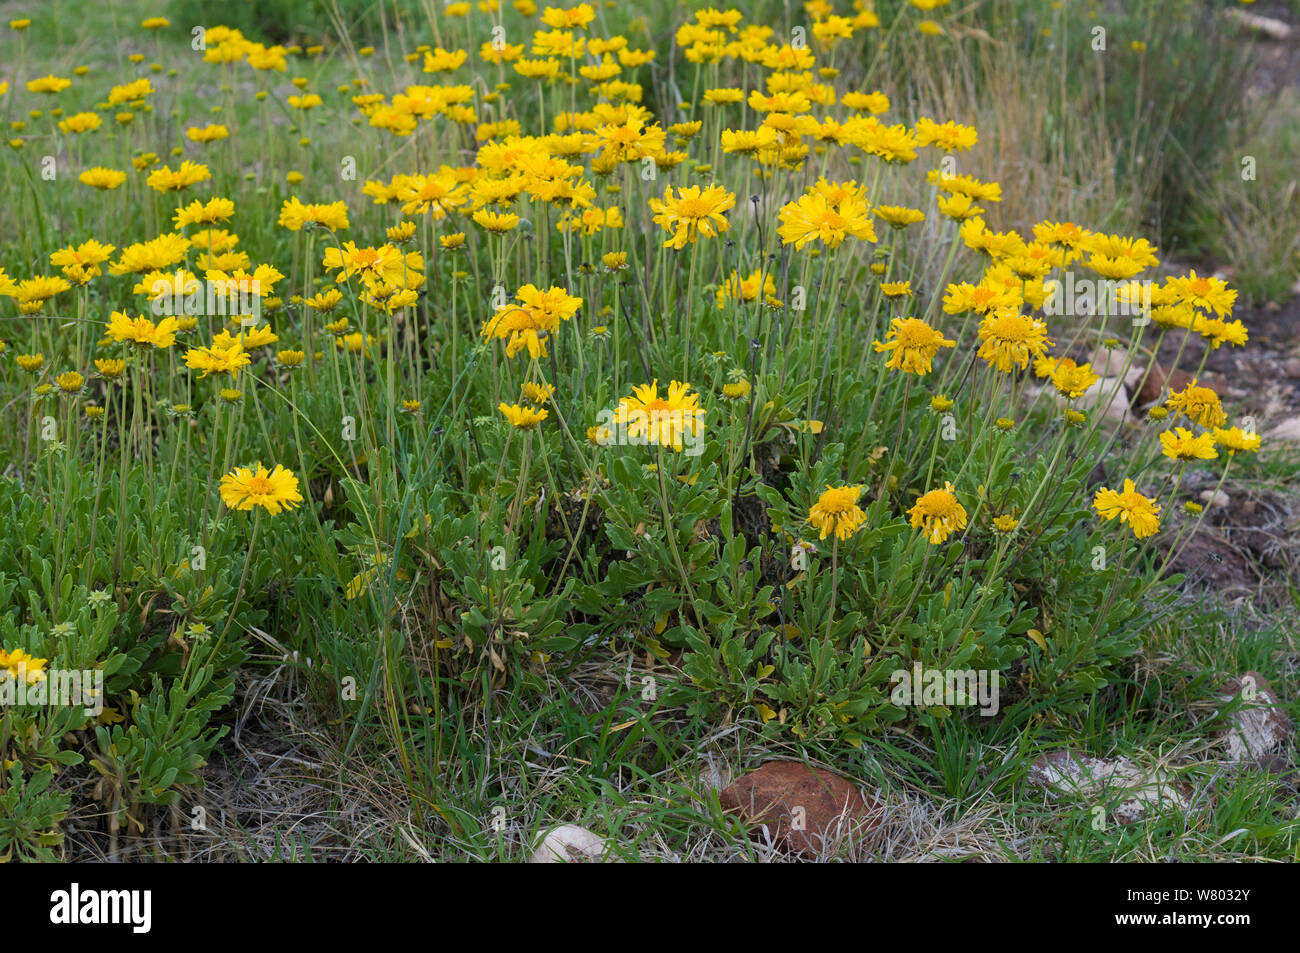 Margarita pampeana / Pampas blanket flower (Gaillardia cabrerae) Lihue Calel, National Park, La Pampa, Argentina. Endemic species Stock Photo